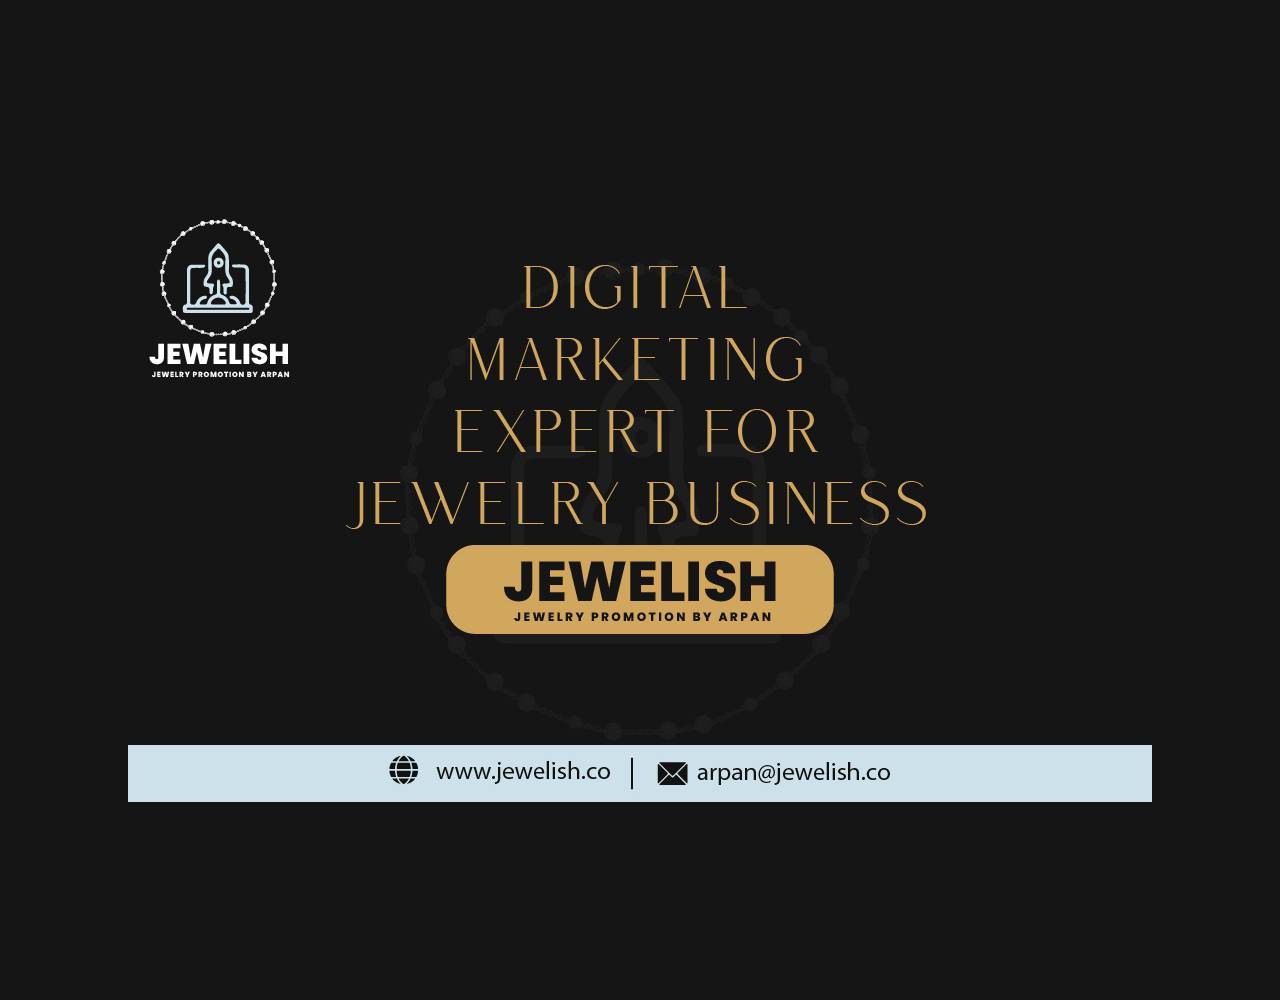 About jewelry digital marketing expert